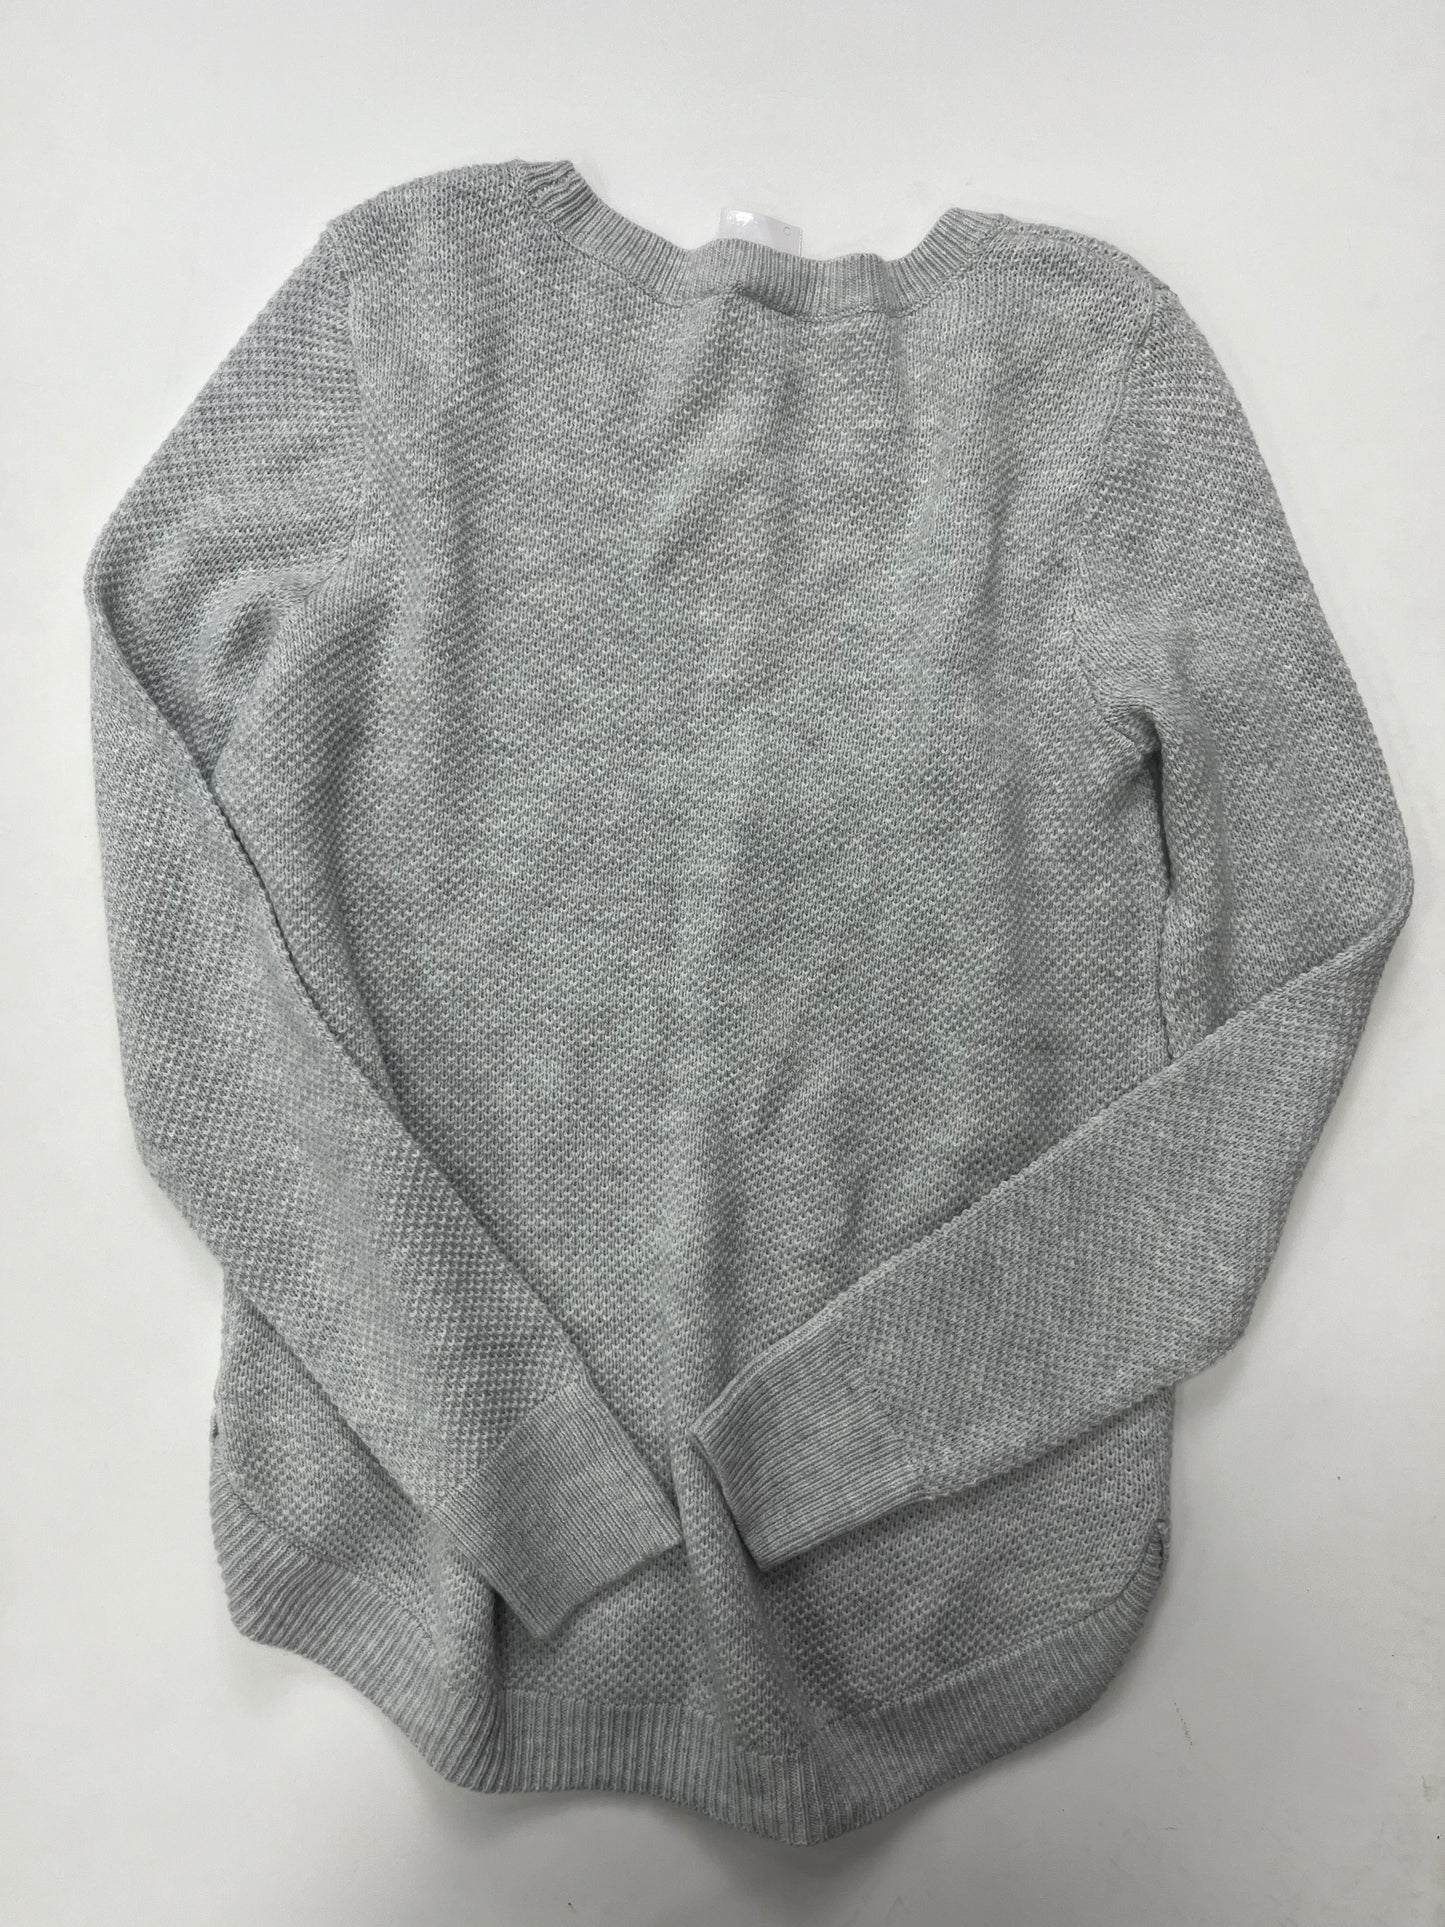 Grey Sweater Gap, Size Xs